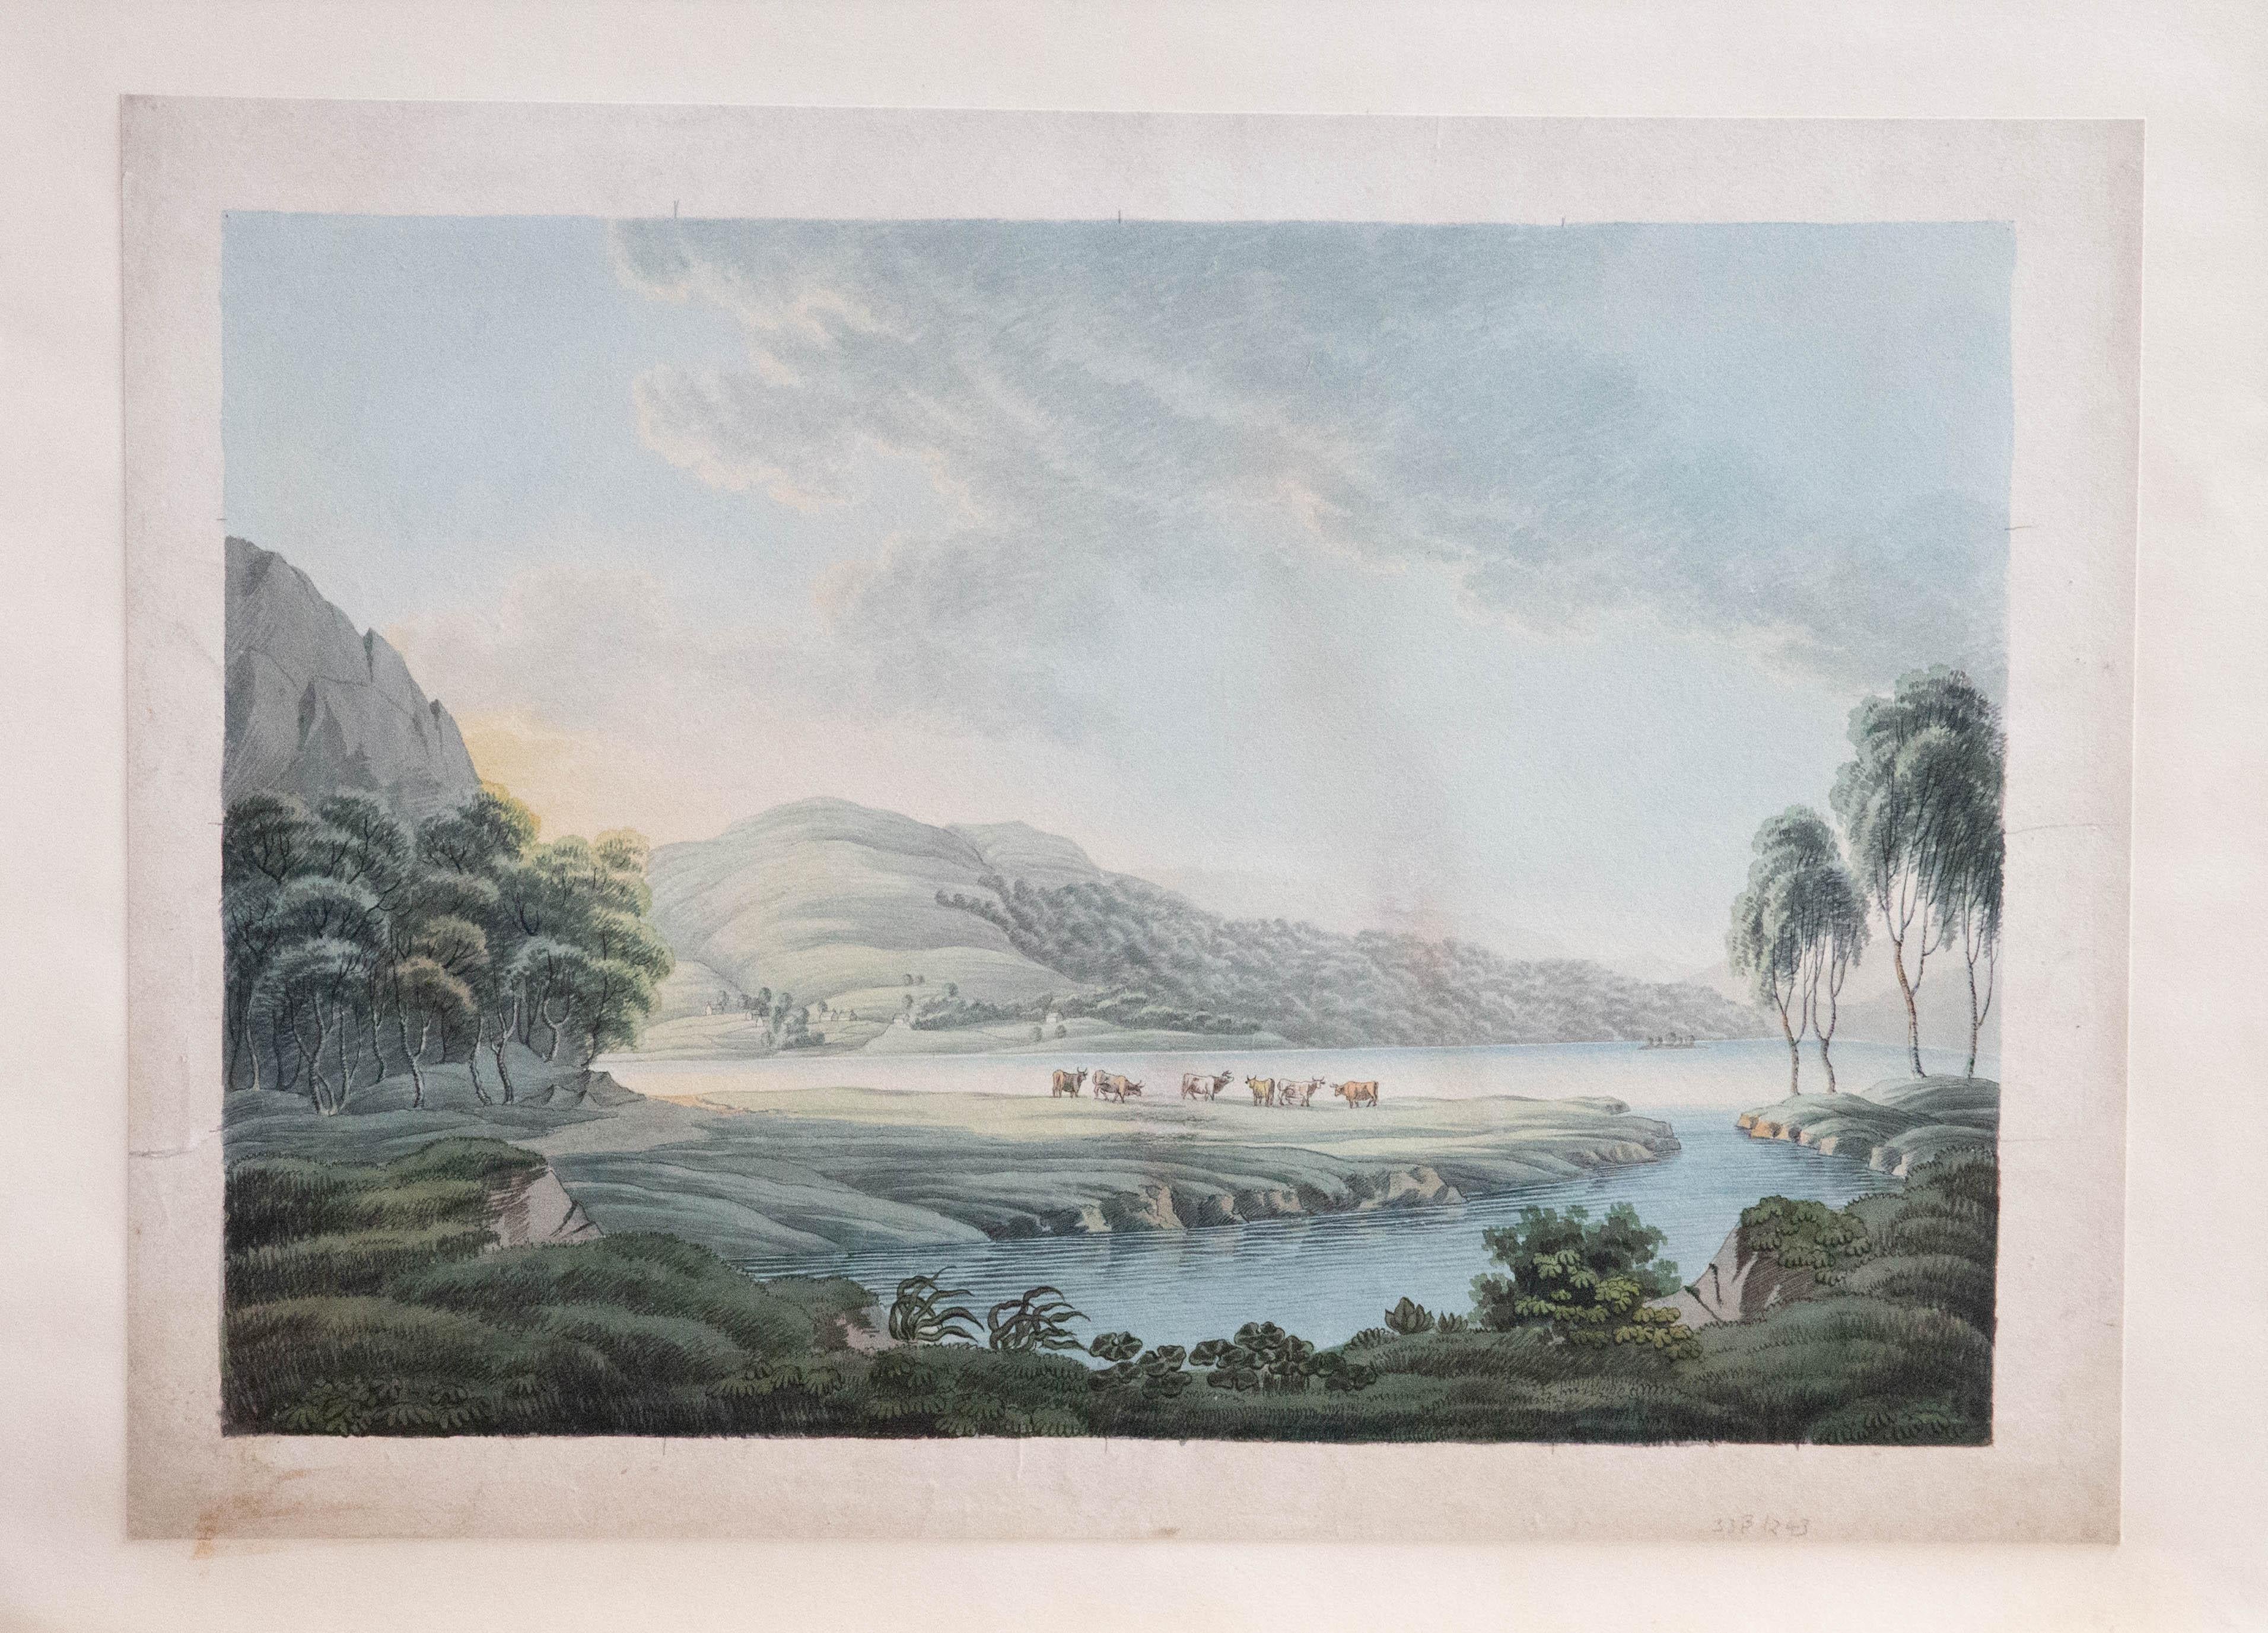 Unknown Landscape Art – Aquarell-Aquarell - Rinne auf einem Plakat, spätes 19. Jahrhundert